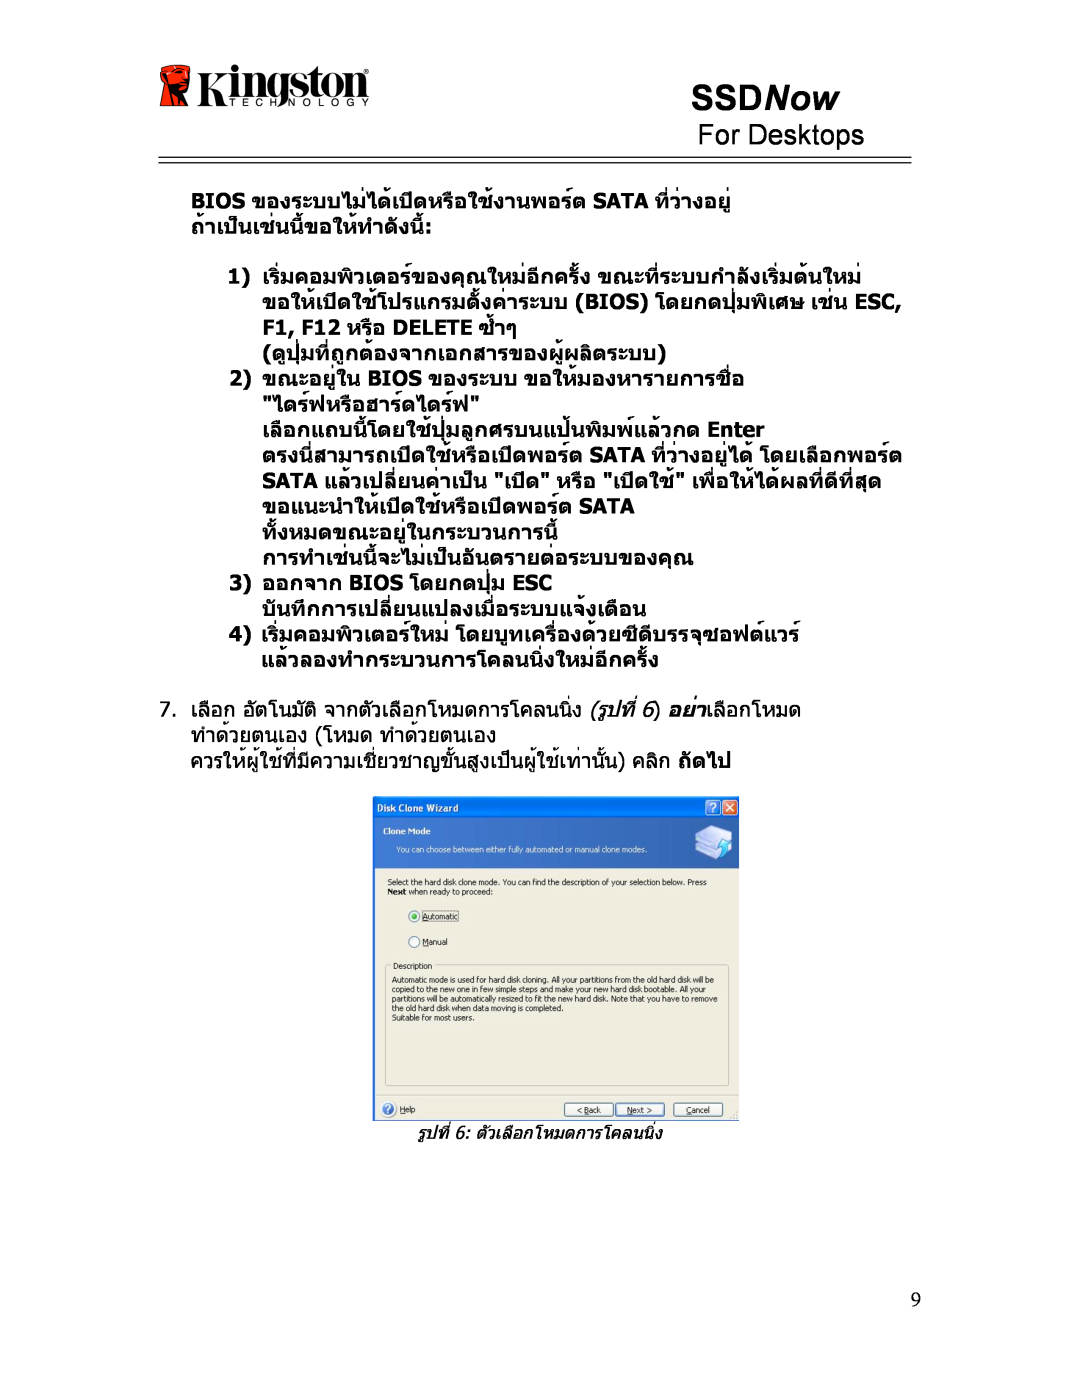 Kingston Technology 07-16-2009 manual SSDNow, For Desktops, ดูปุ่มที่ถูกต้องจากเอกสารของผู้ผลิตระบบ 